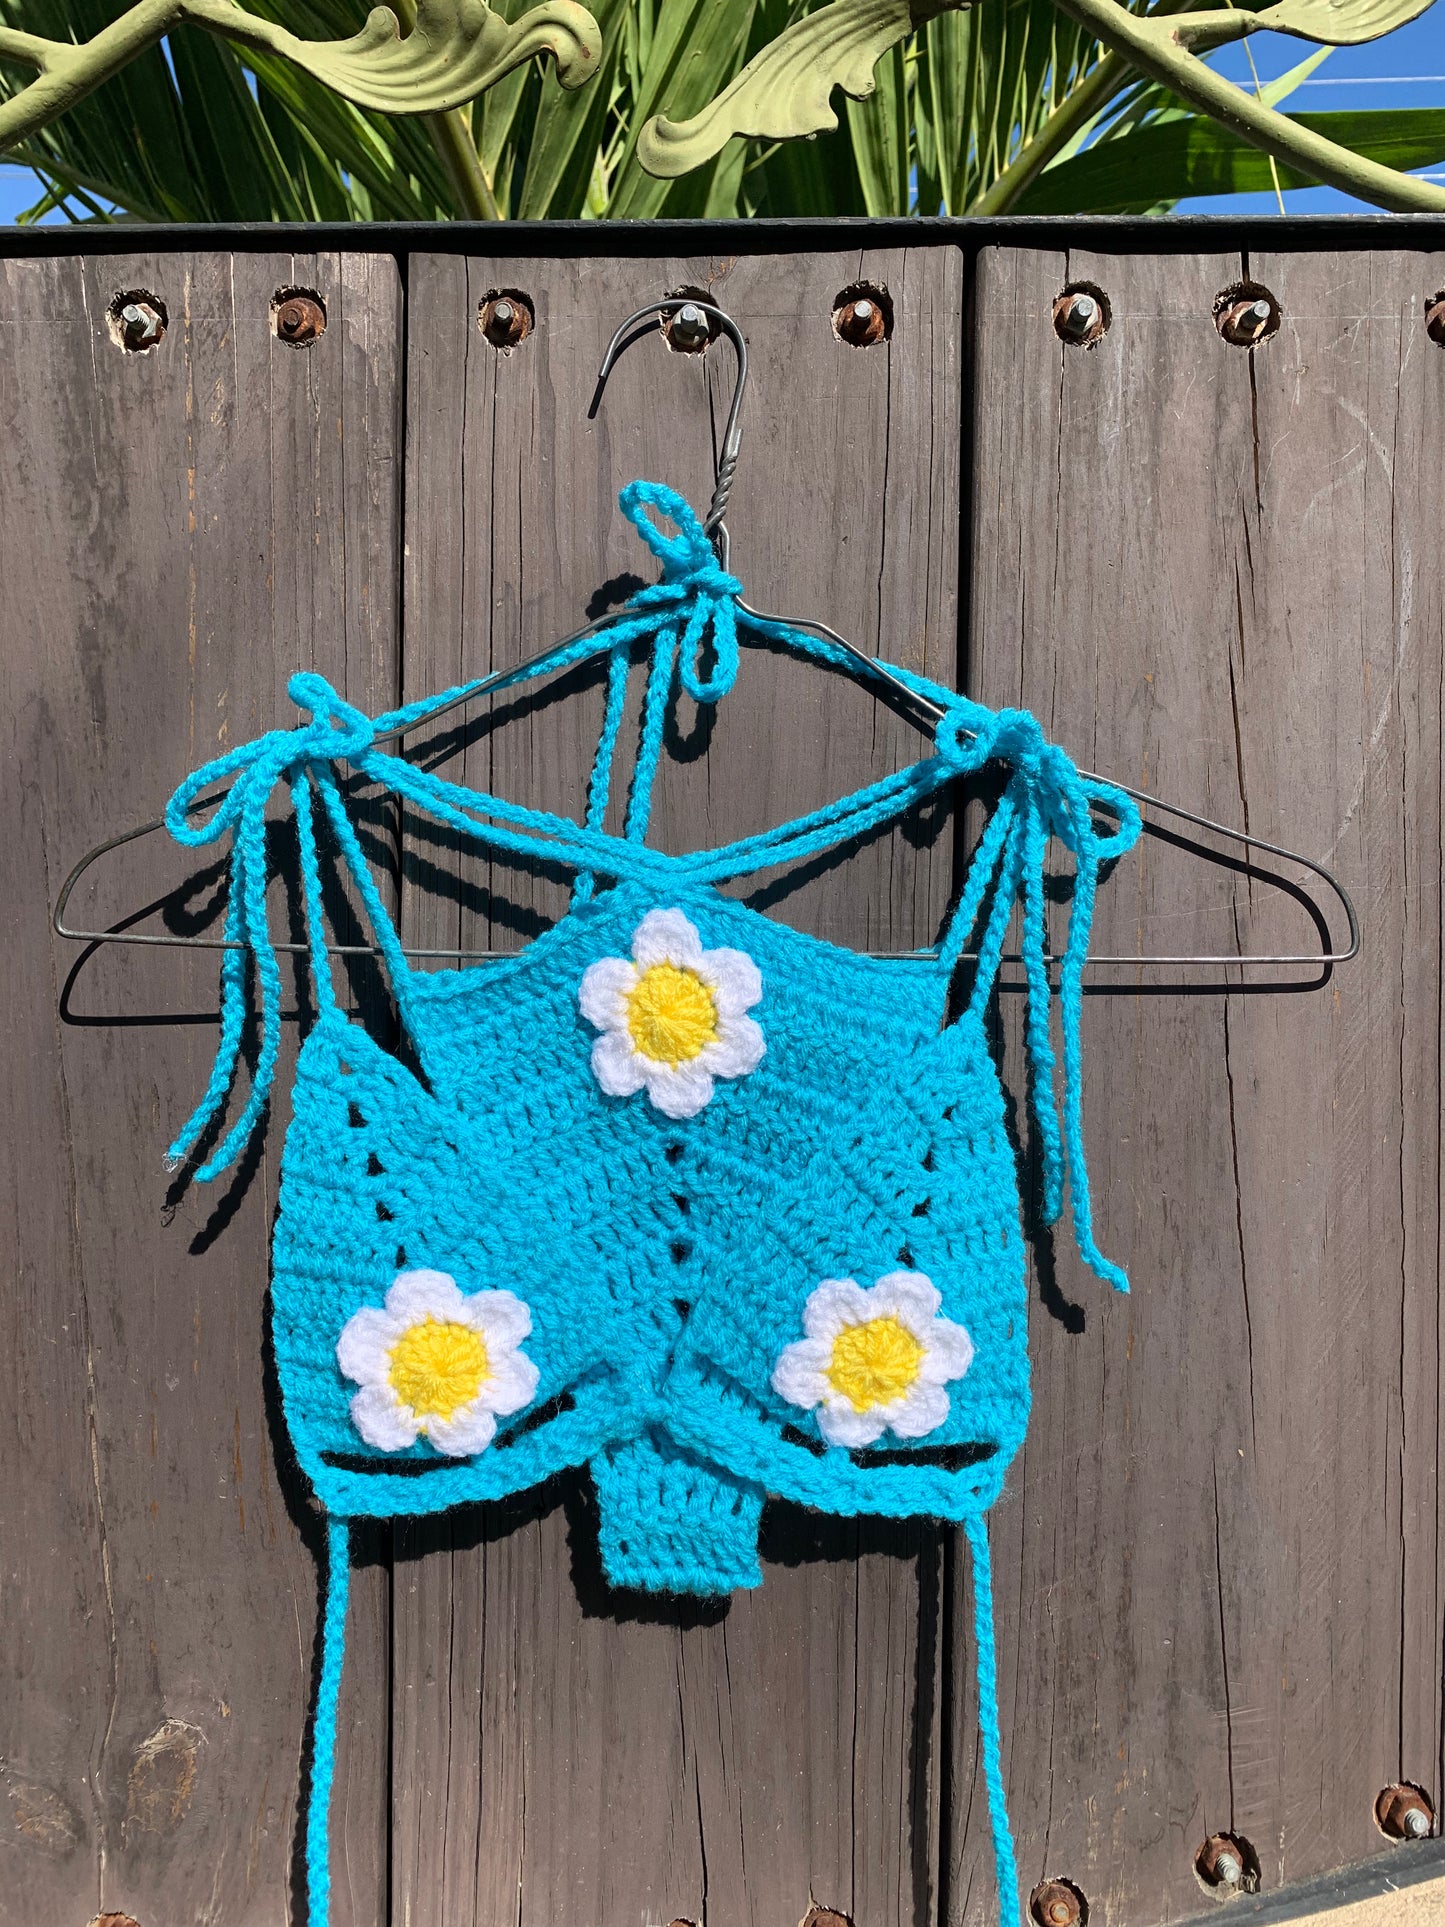 Daisie Crochet Bikini